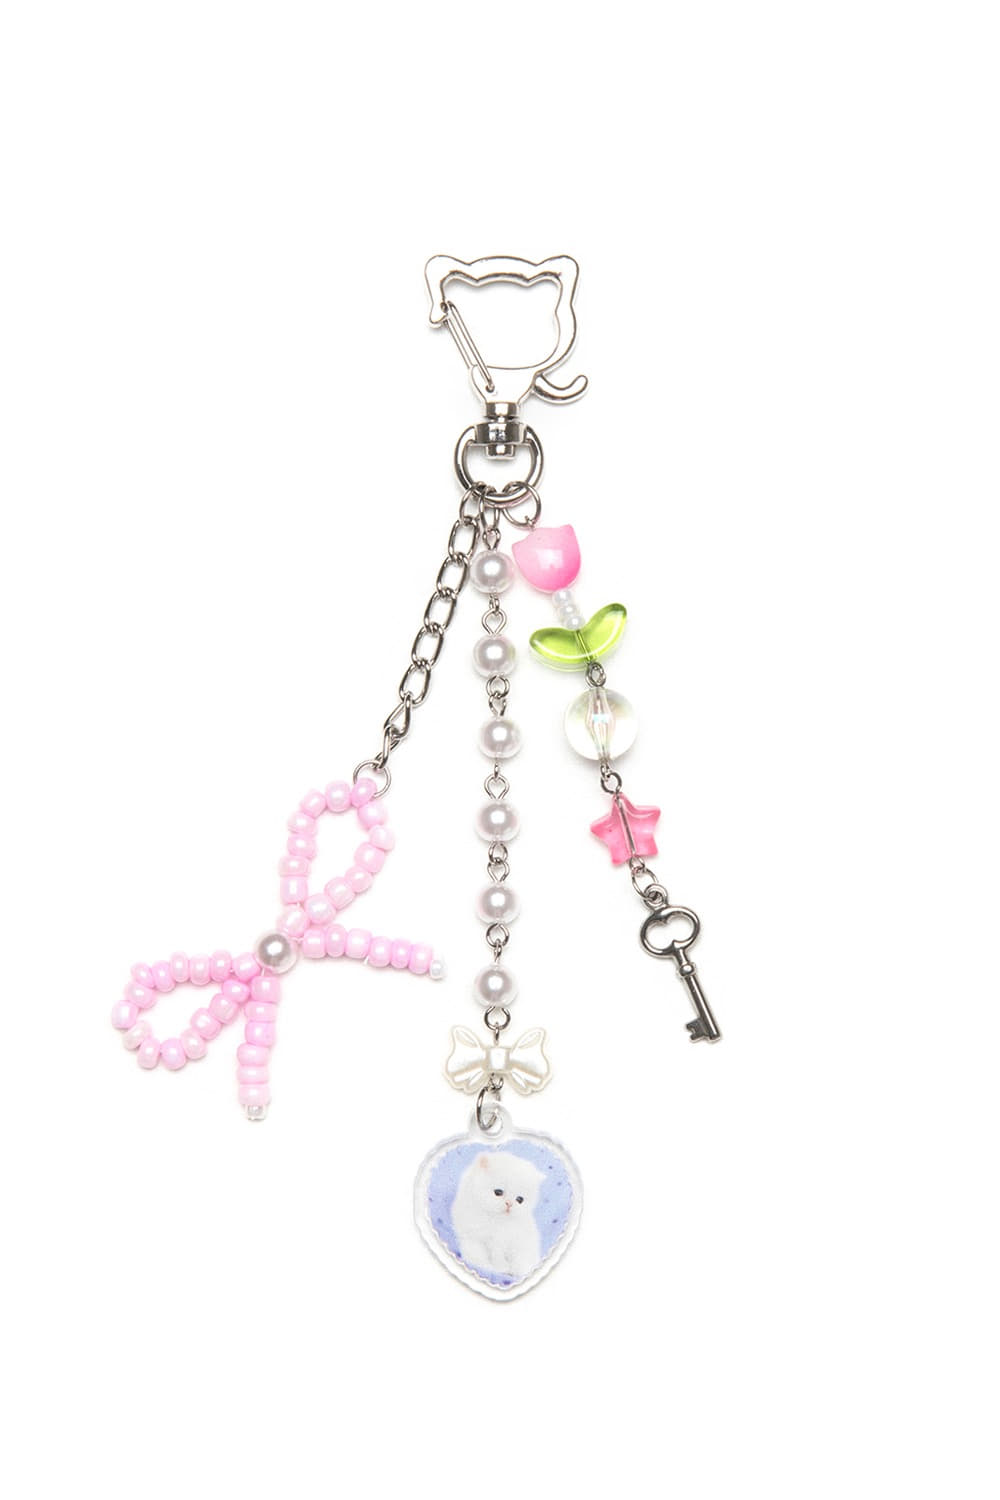 Cara key chain (Cat) / Order-made